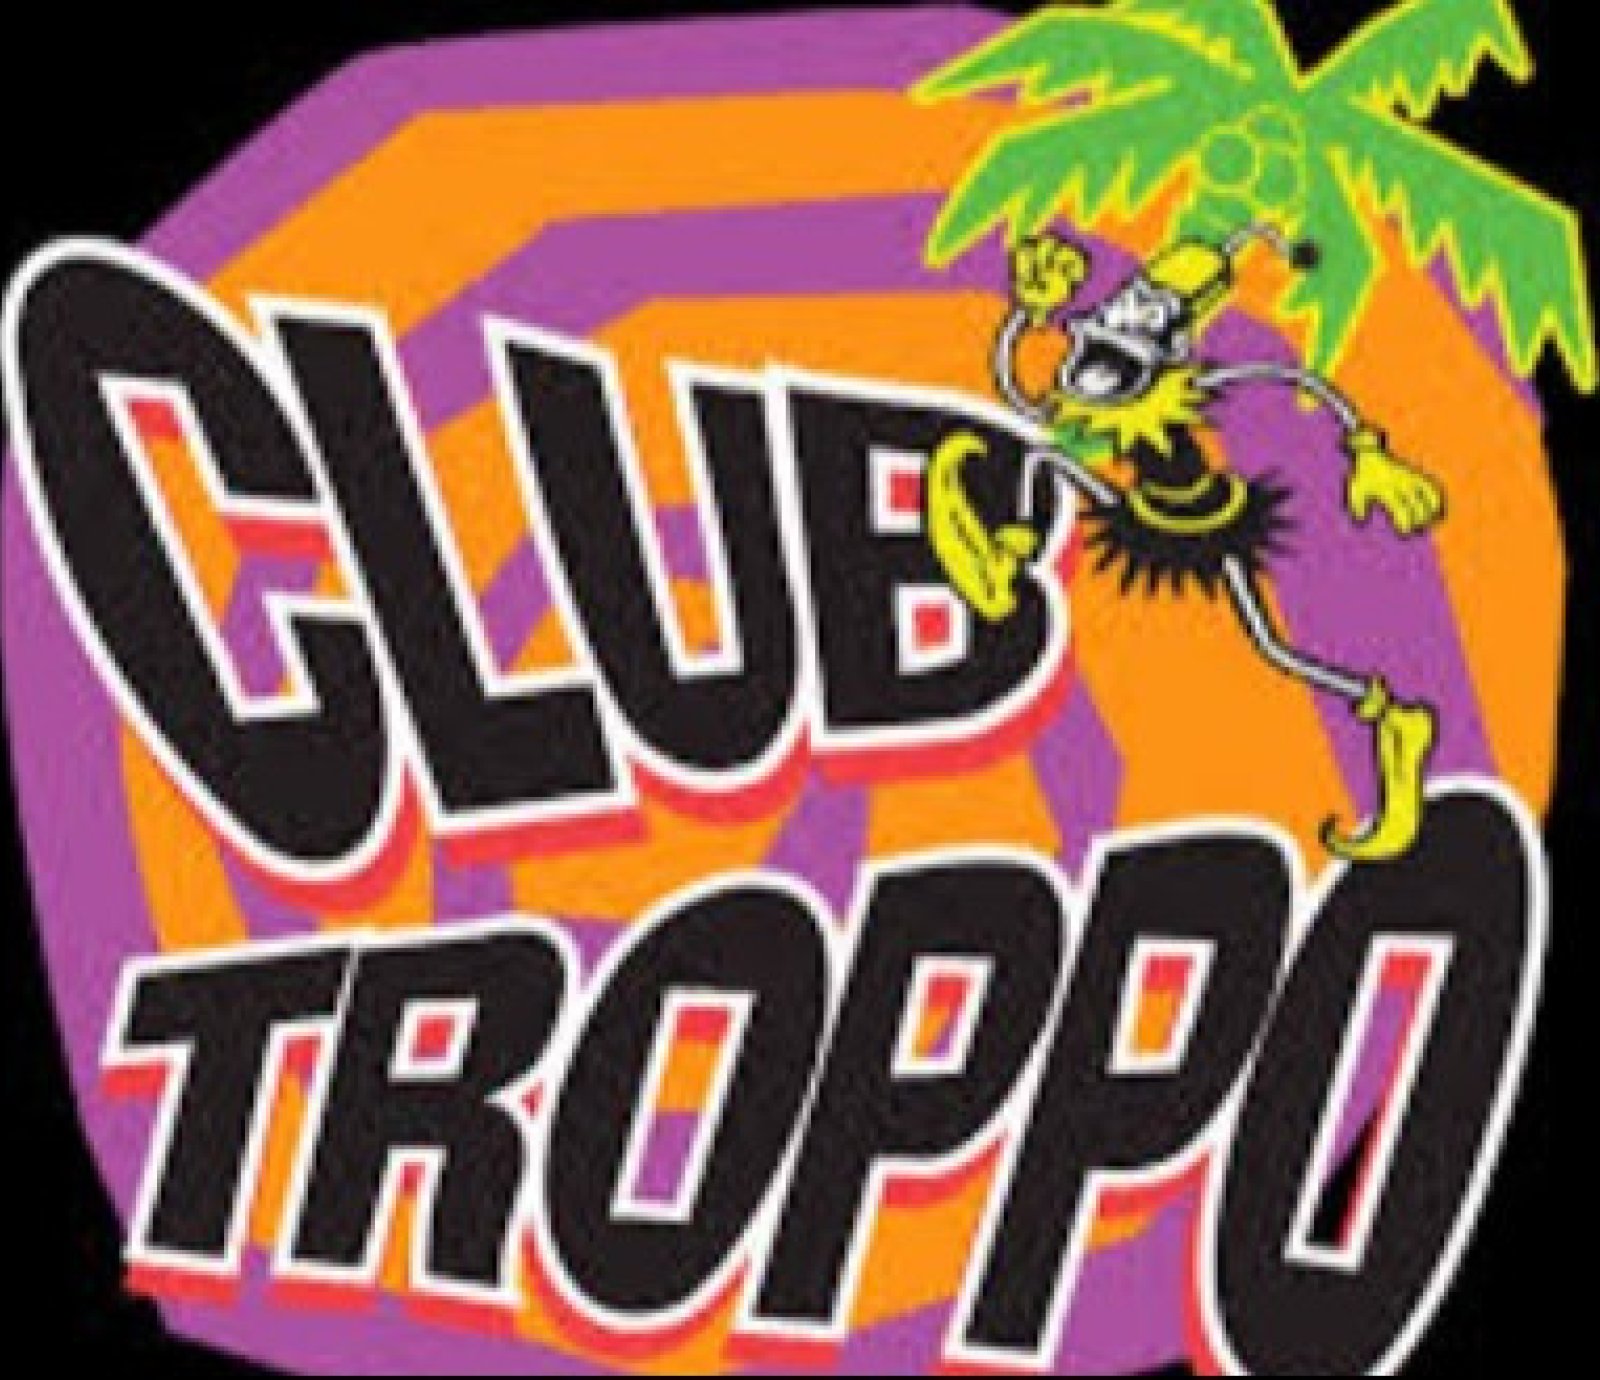 Club Troppo